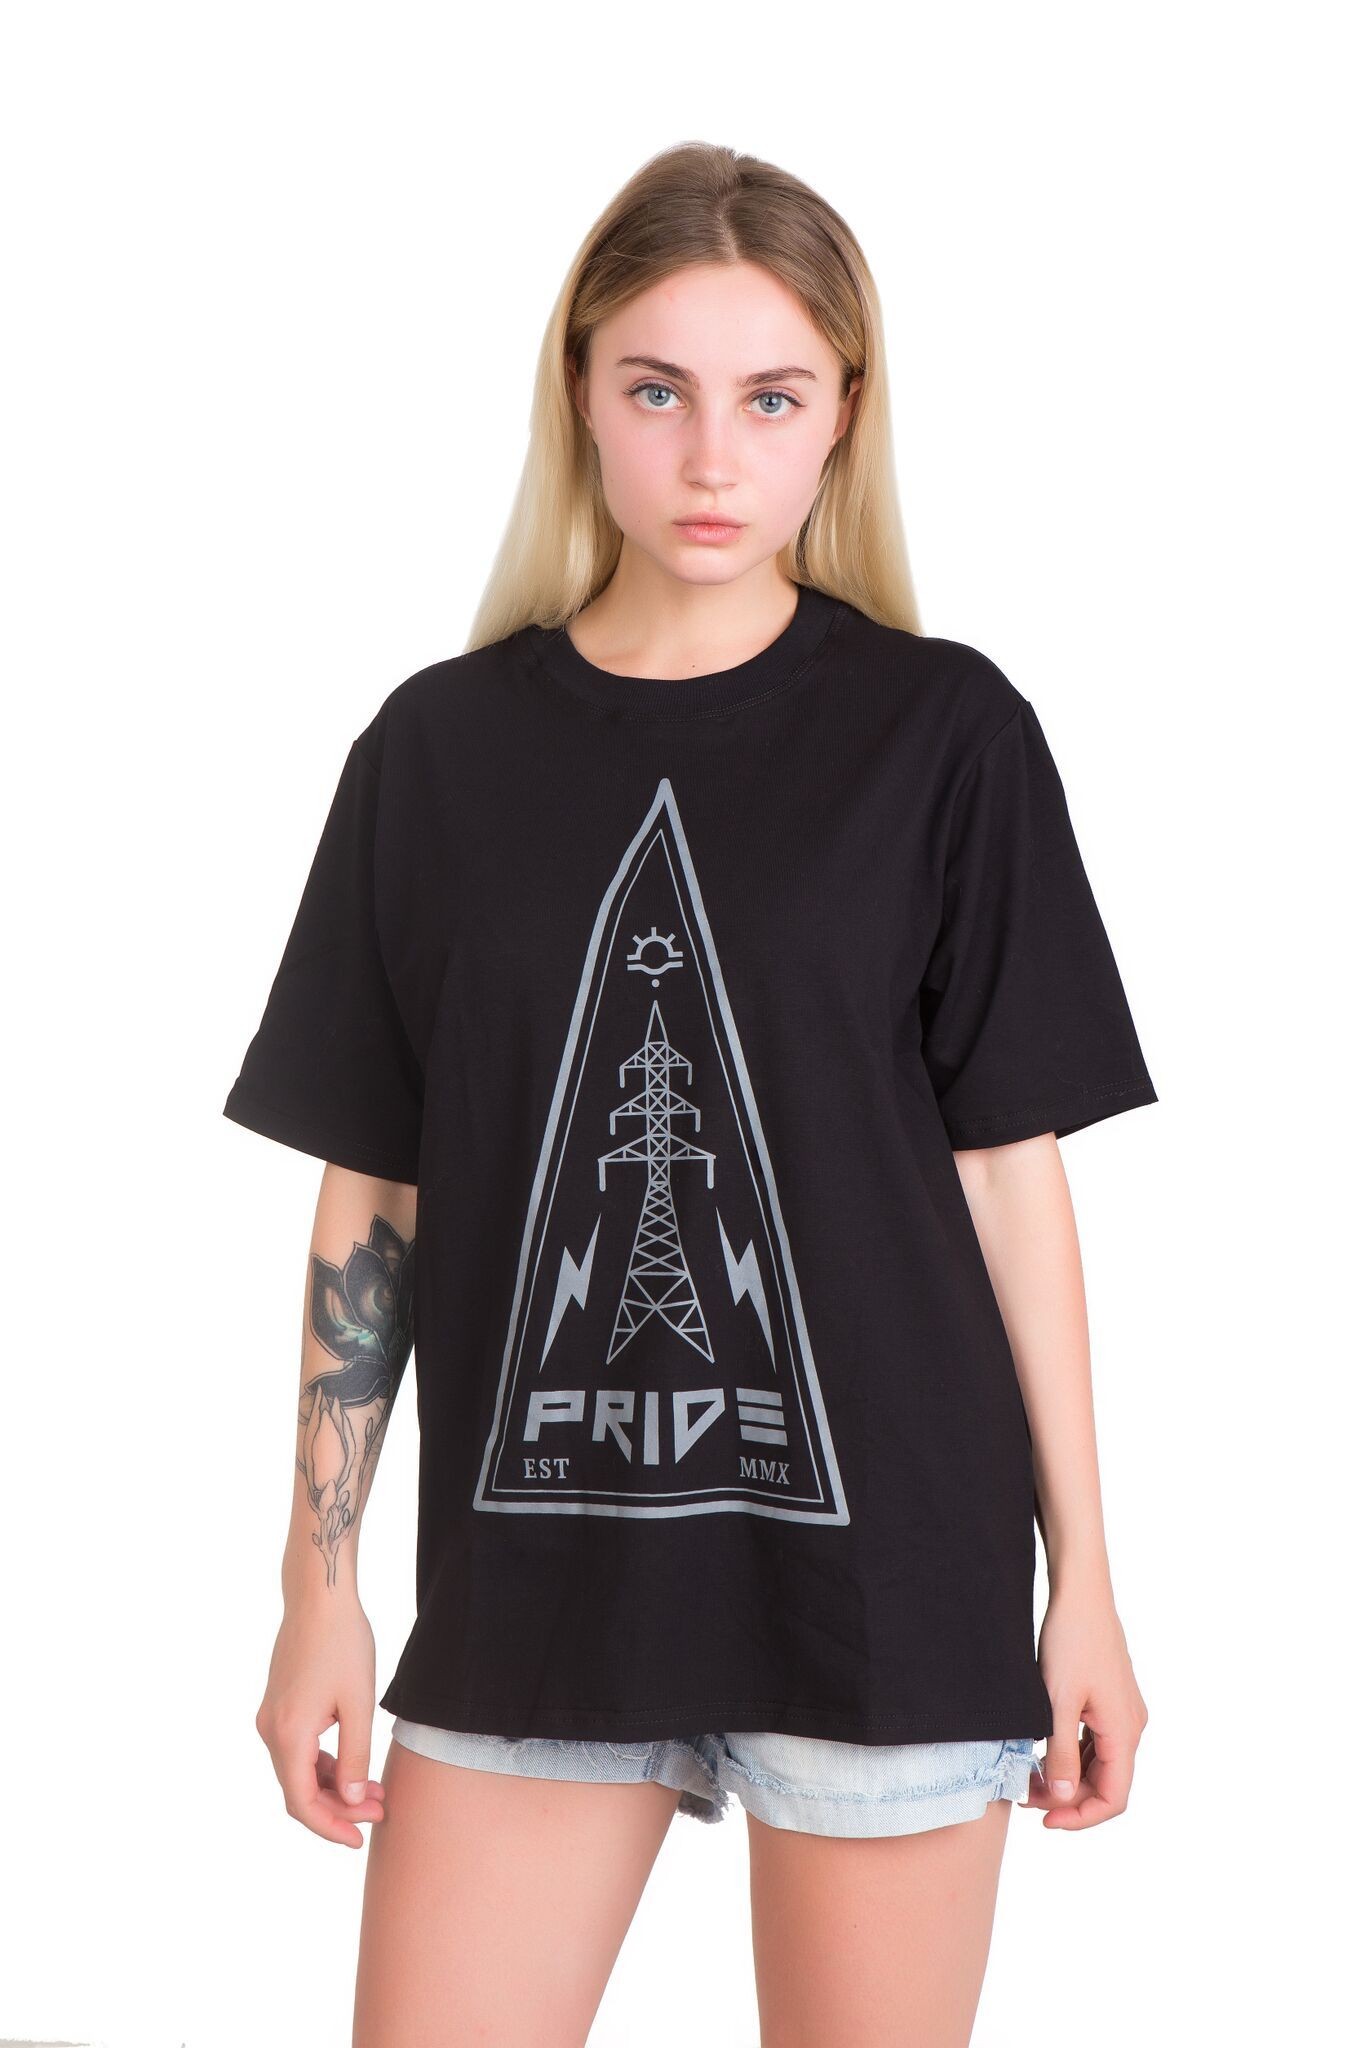 PRIDE T-shirt High voltage black, size M Photo